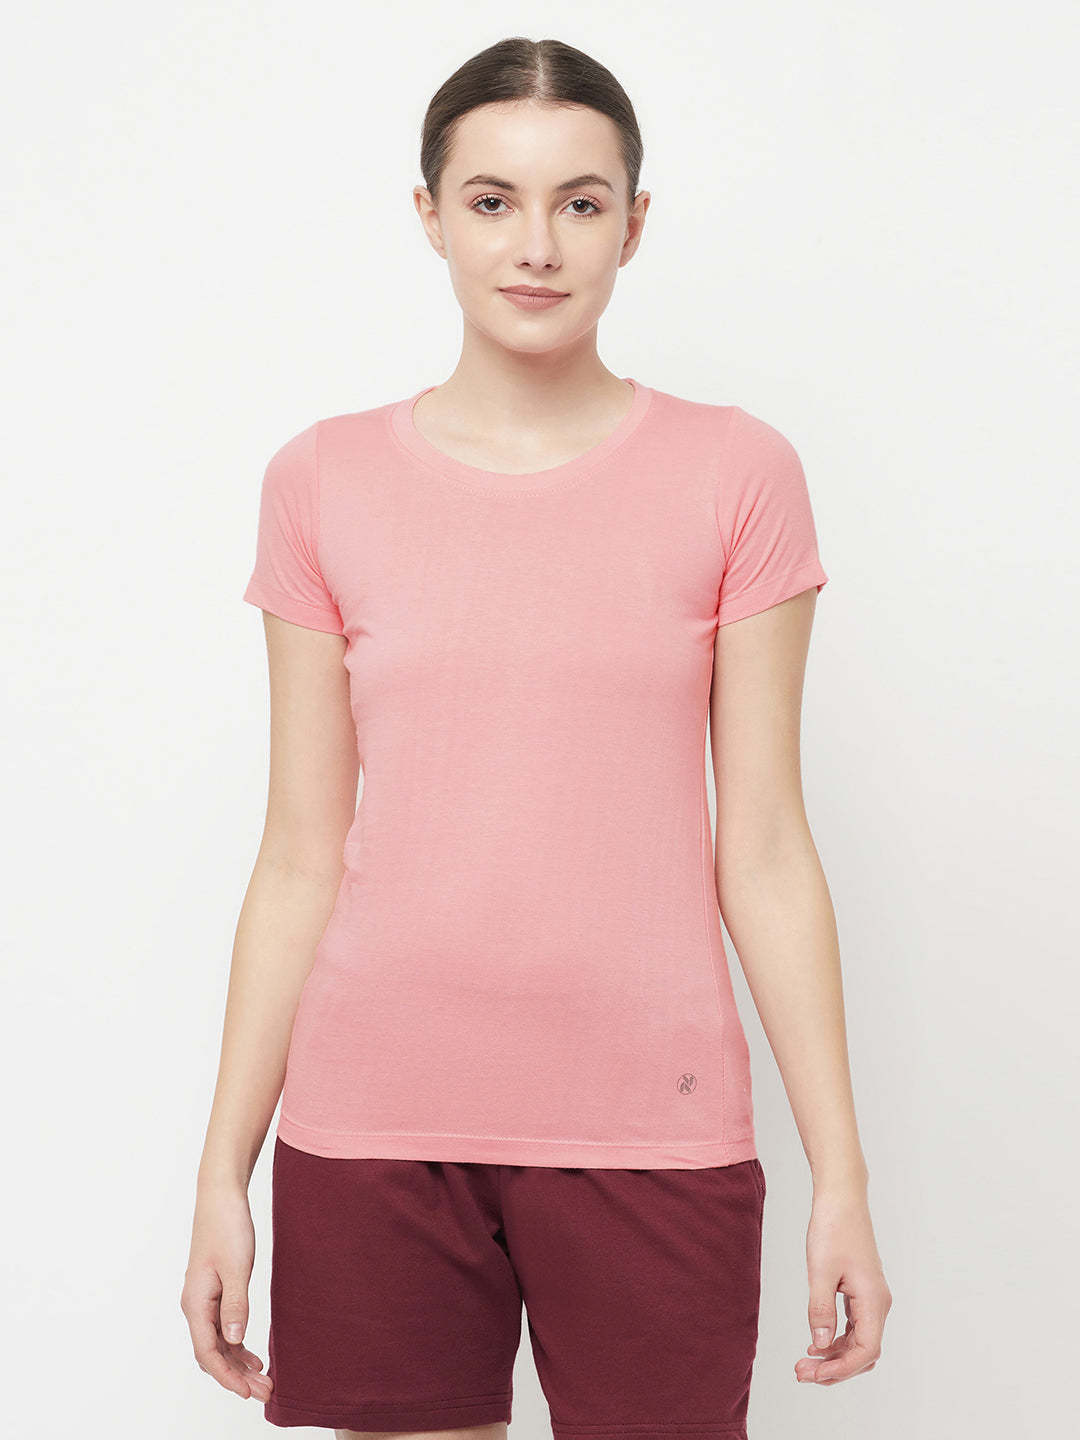 Slim Fit Premium Cotton Tshirts (Pack of 3- Black, Orange, Pink)